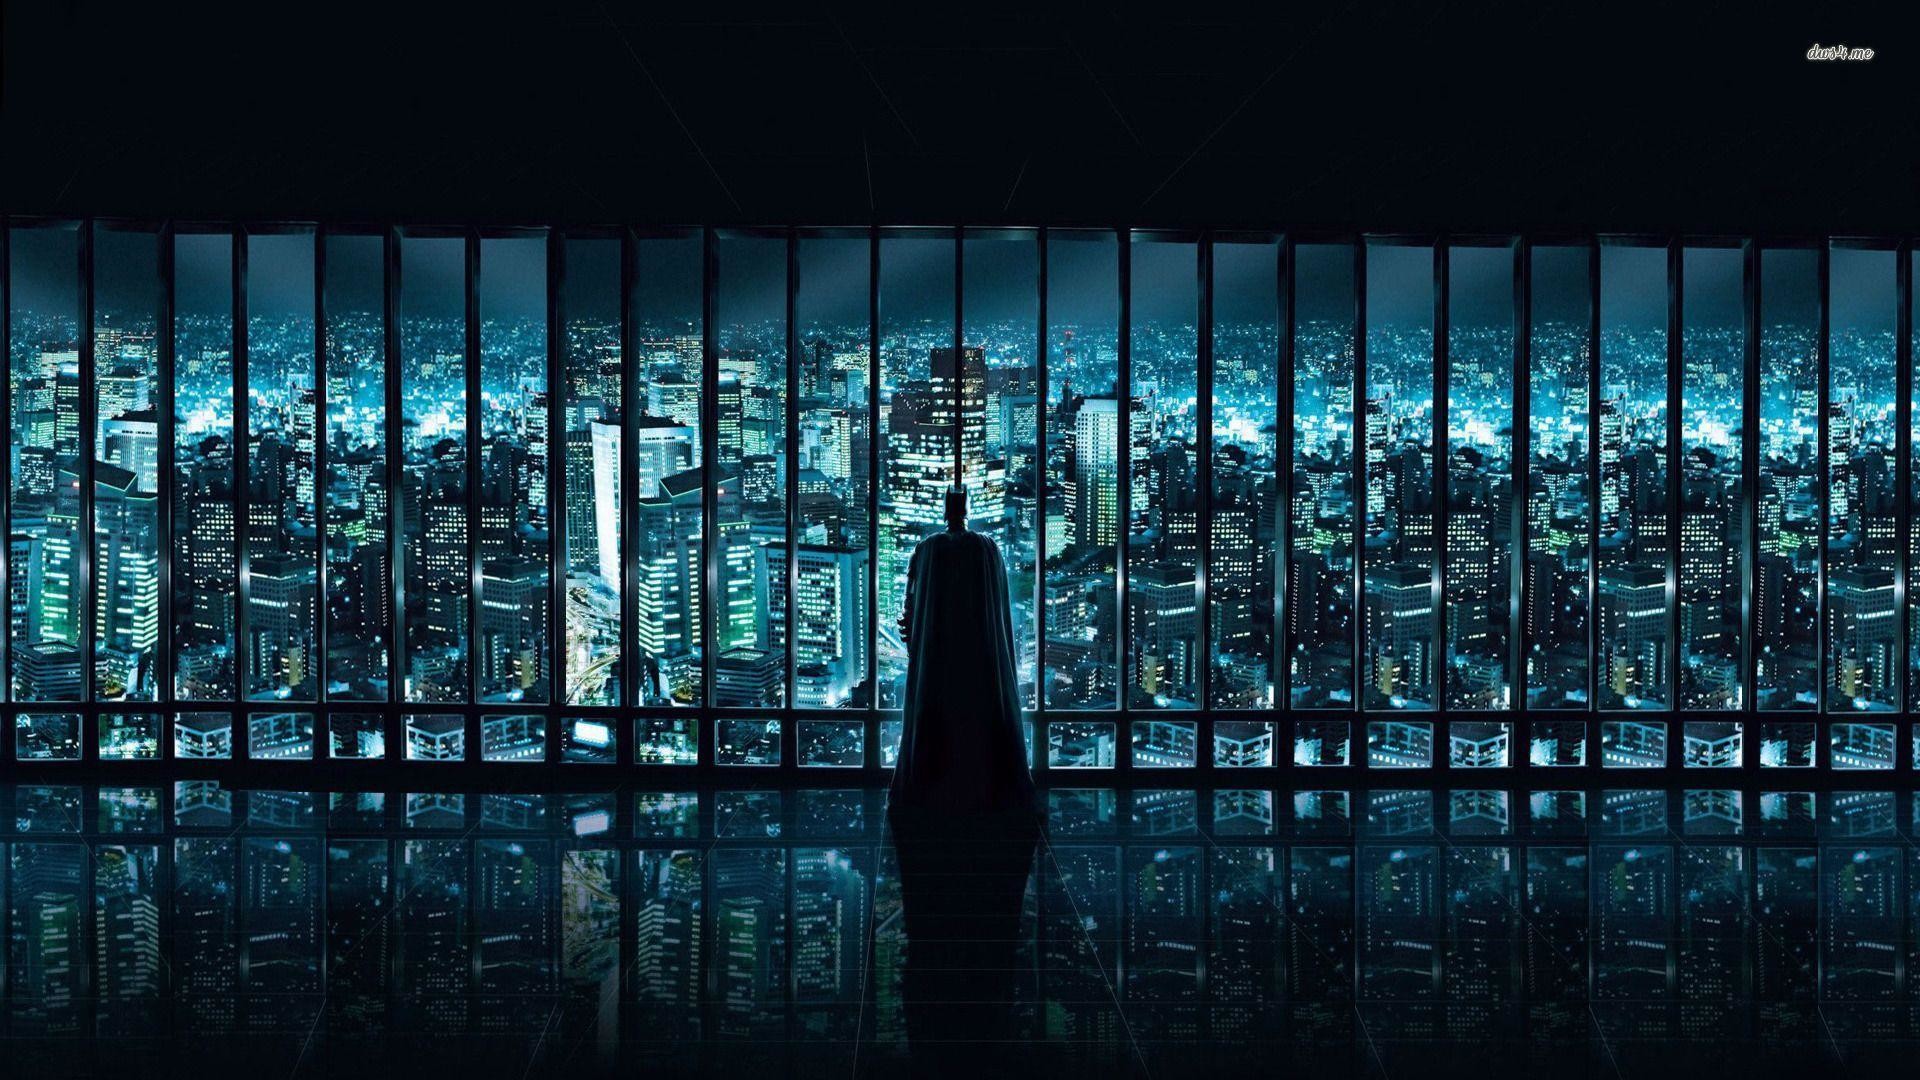 1920x1080 The Dark Knight Rises wallpaper - Movie wallpapers - #